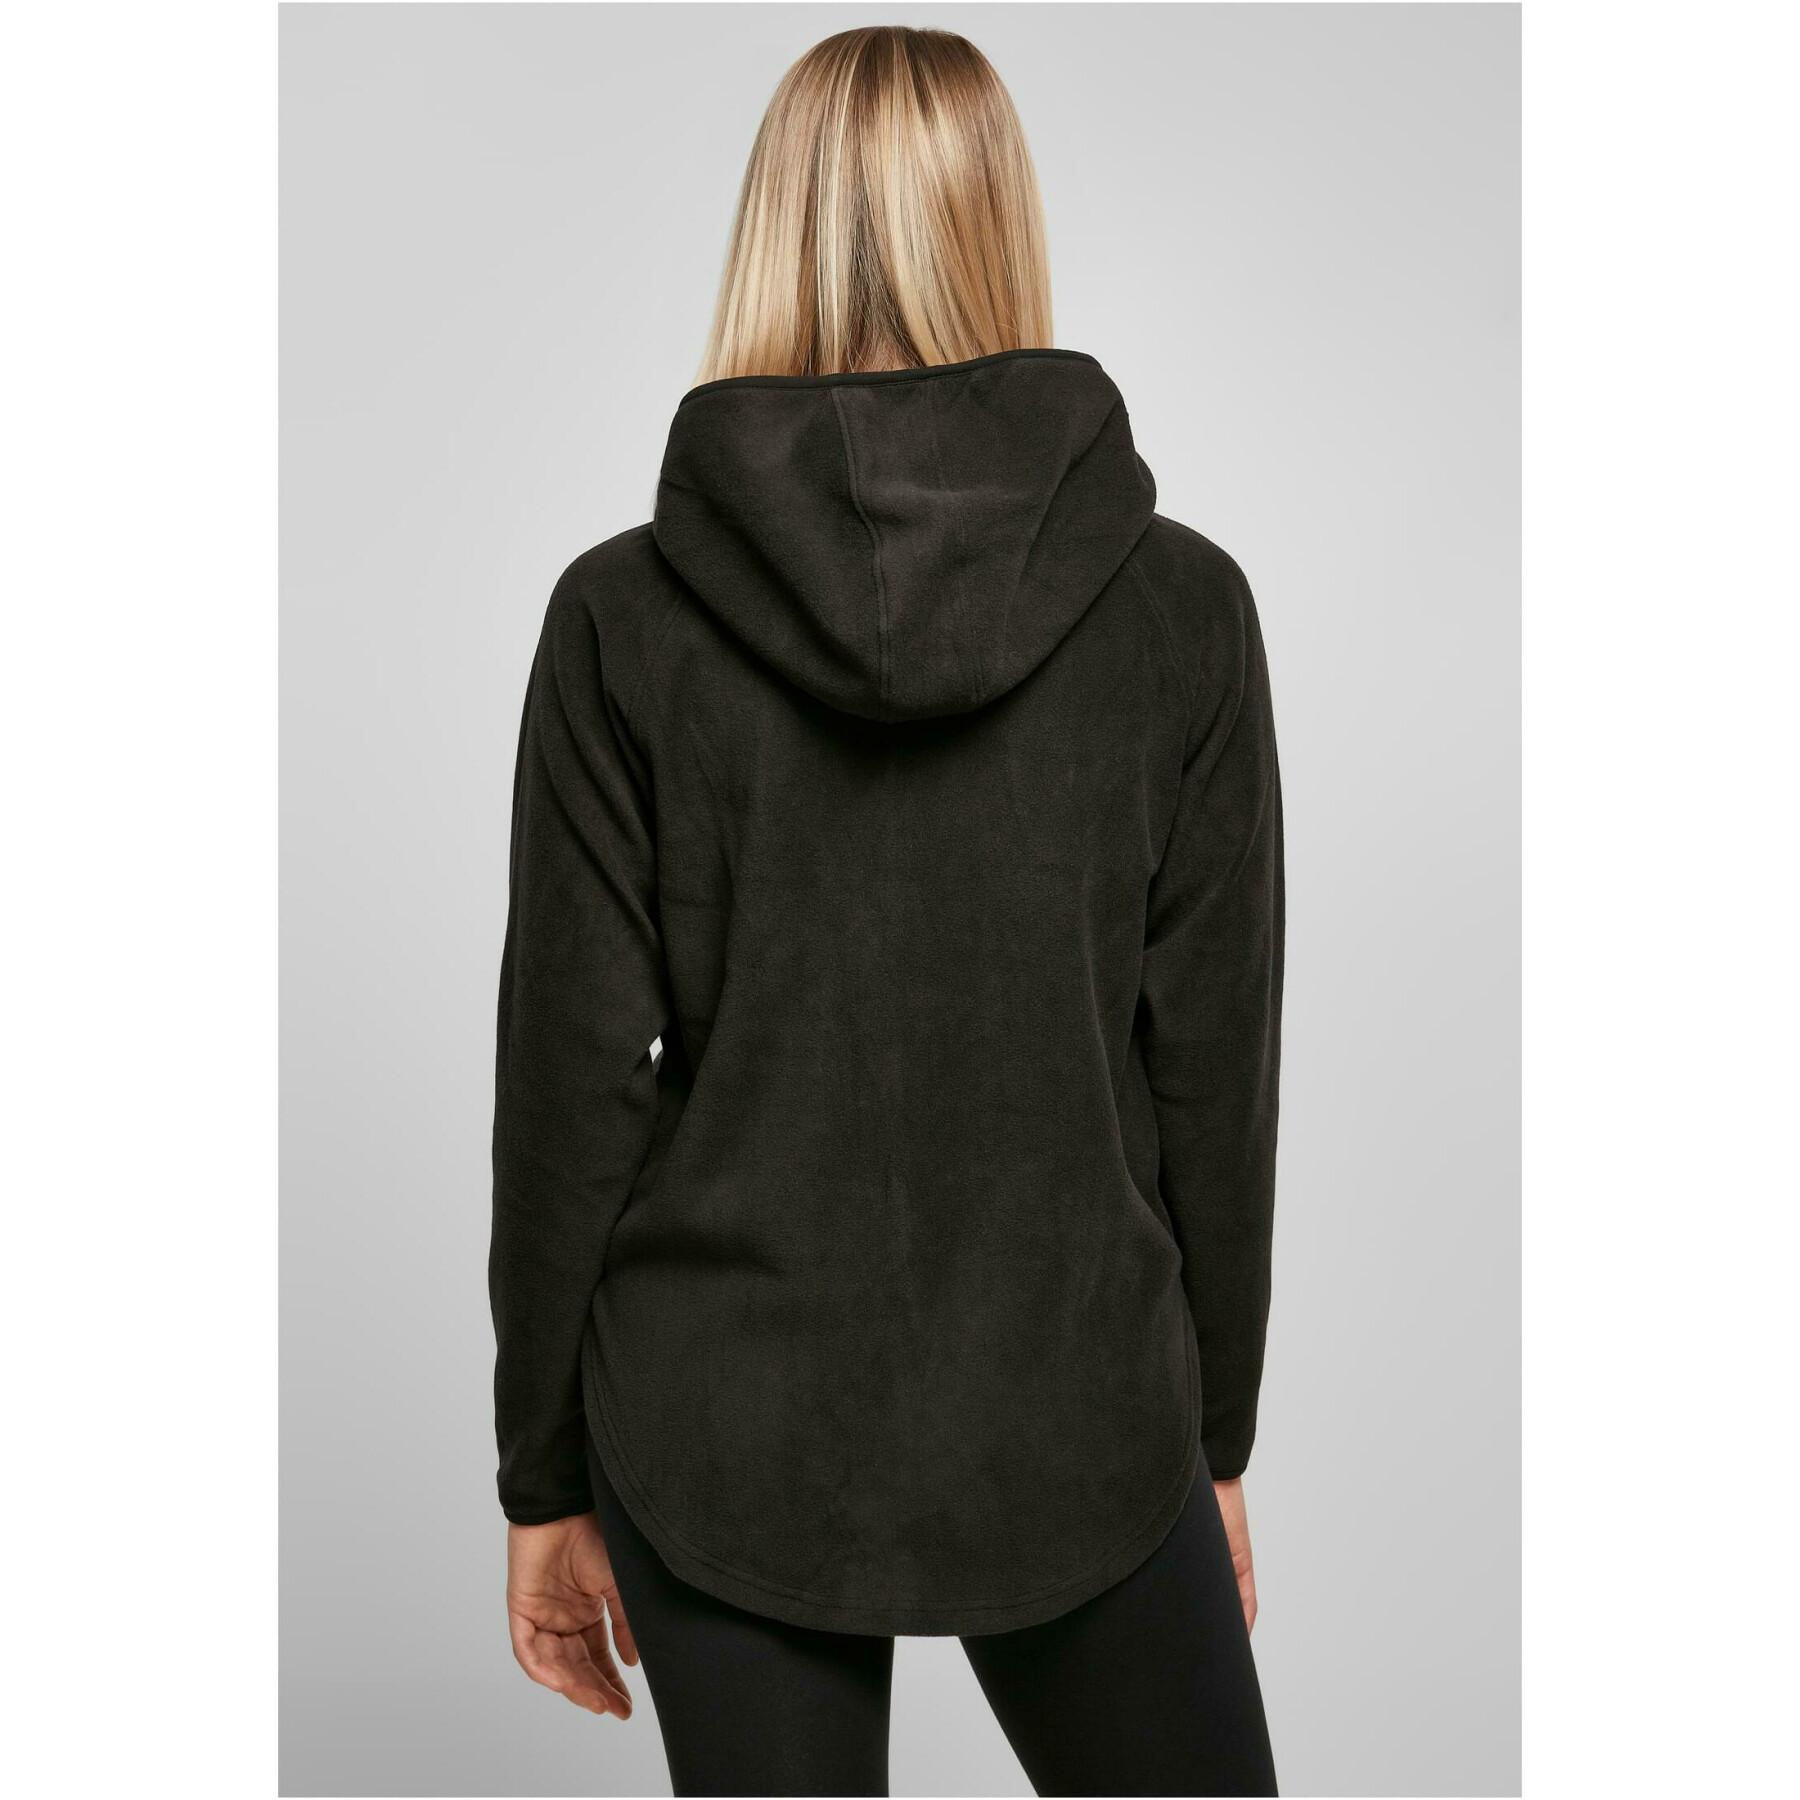 Women's hooded fleece Urban Classics